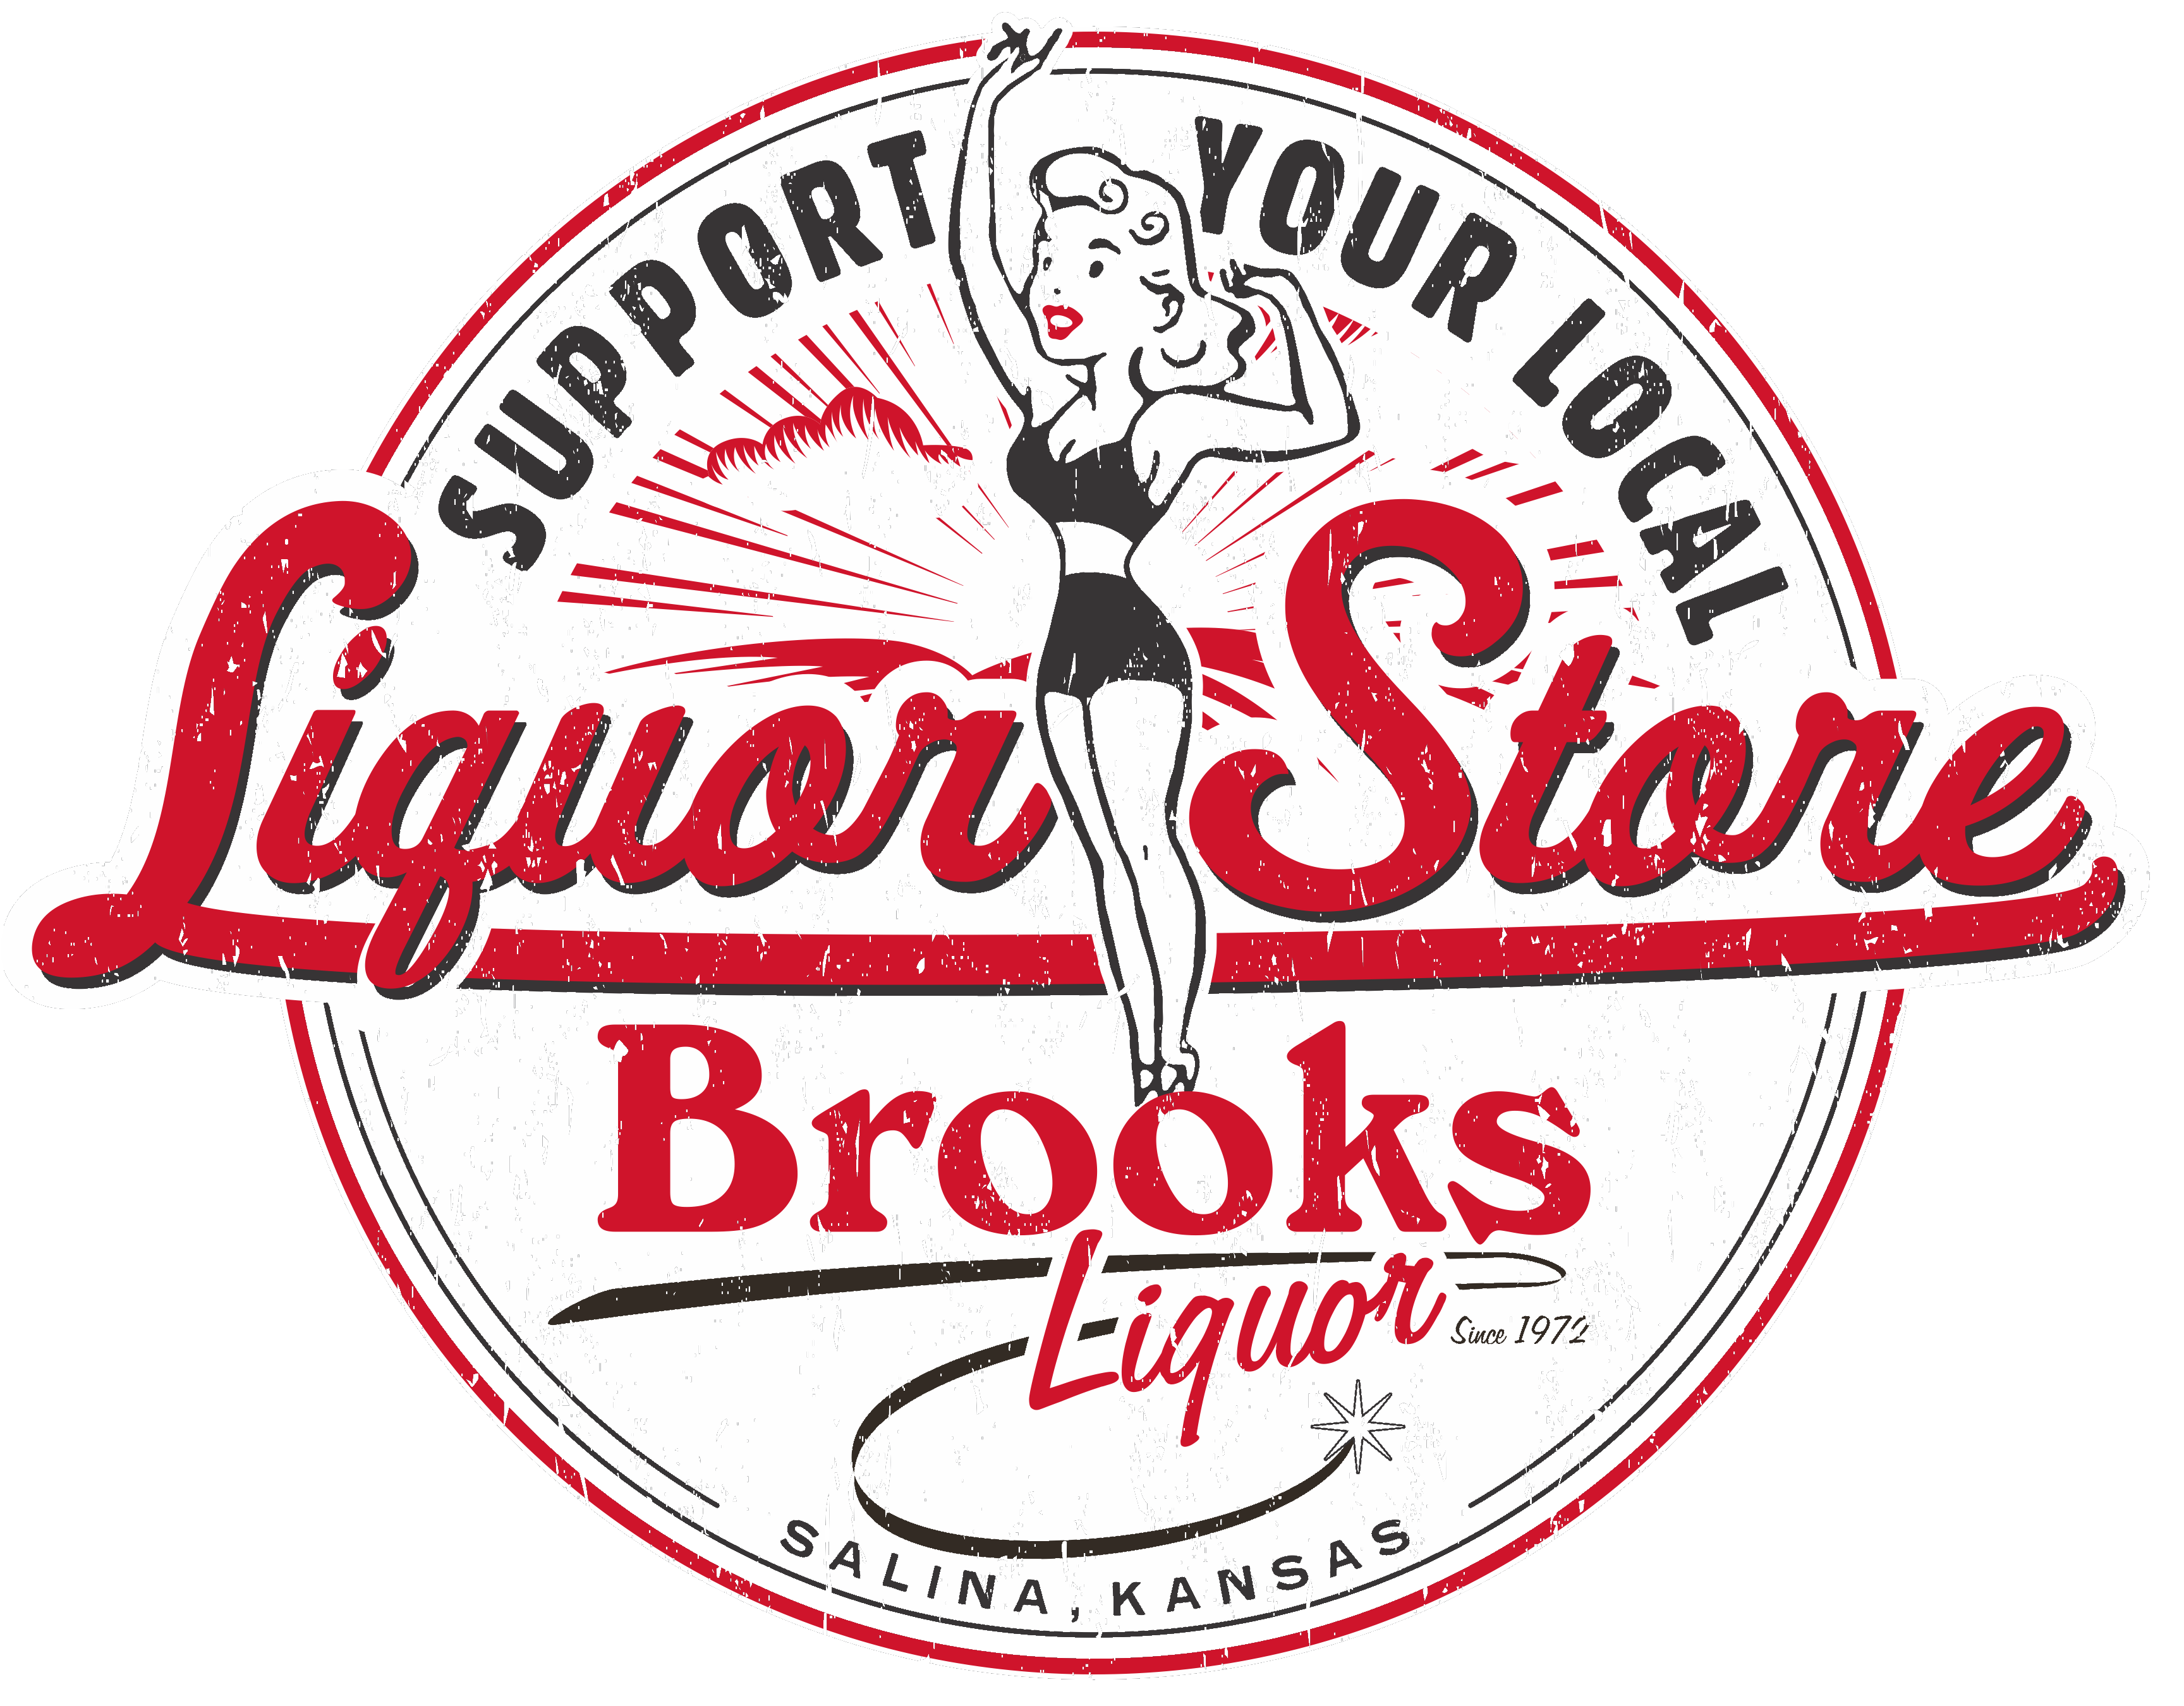 Brooks Liquor Store